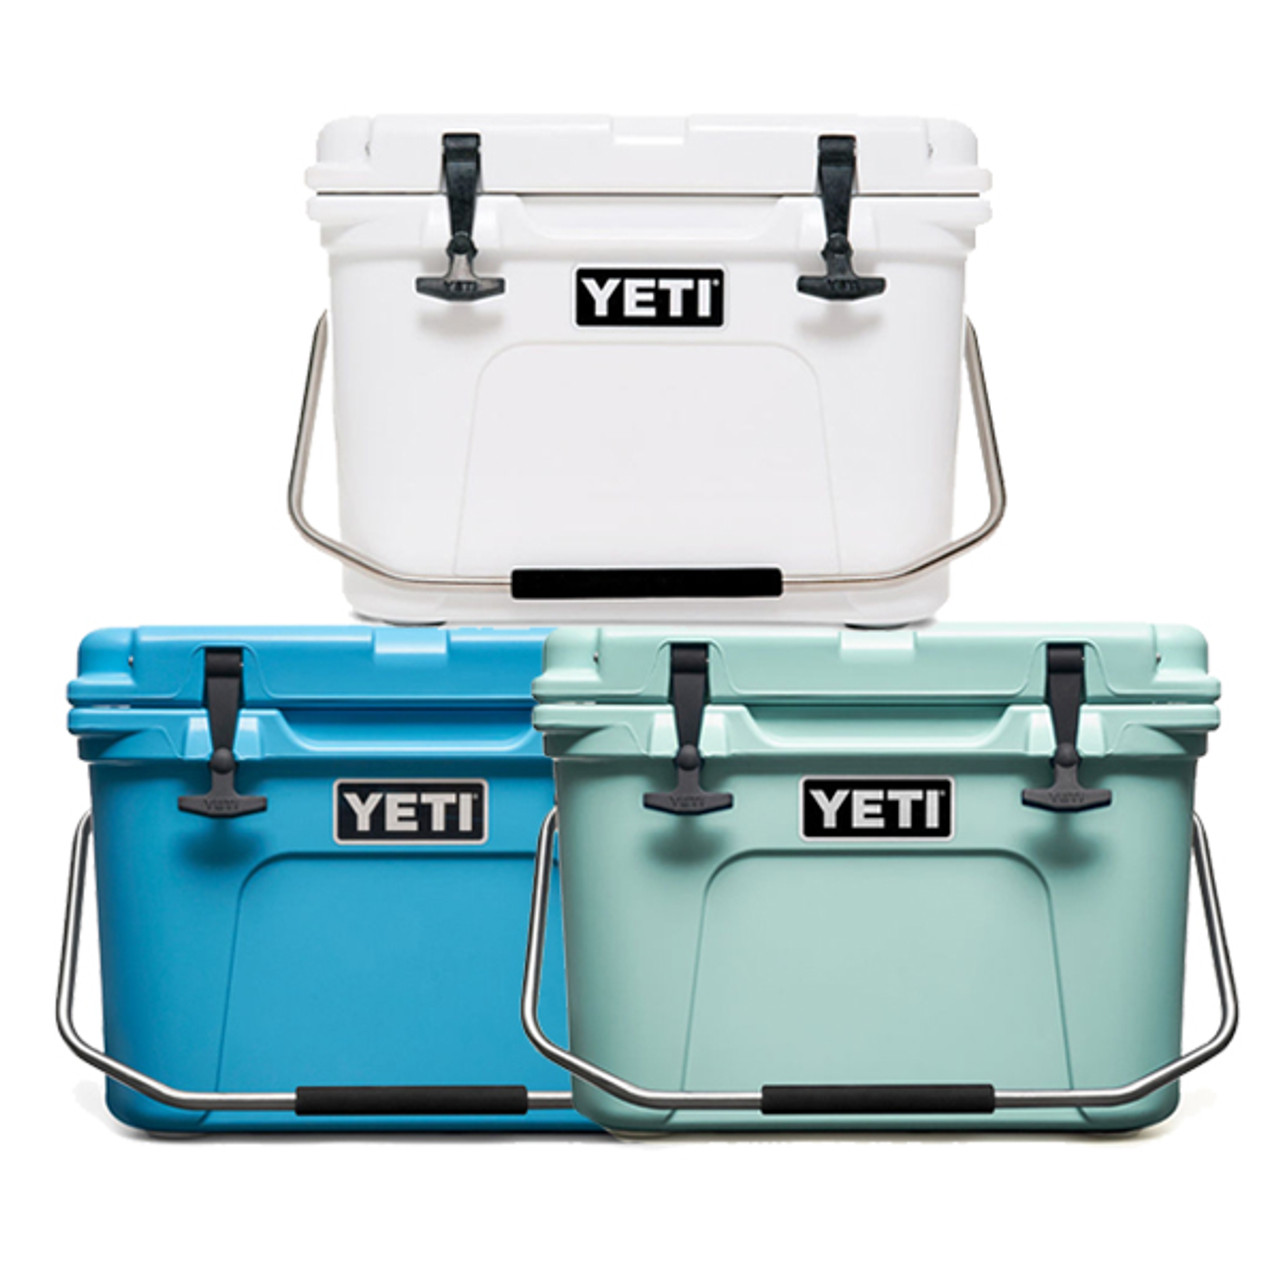 Cooler Wheel Kit for YETI Roadie 24 Coolers 